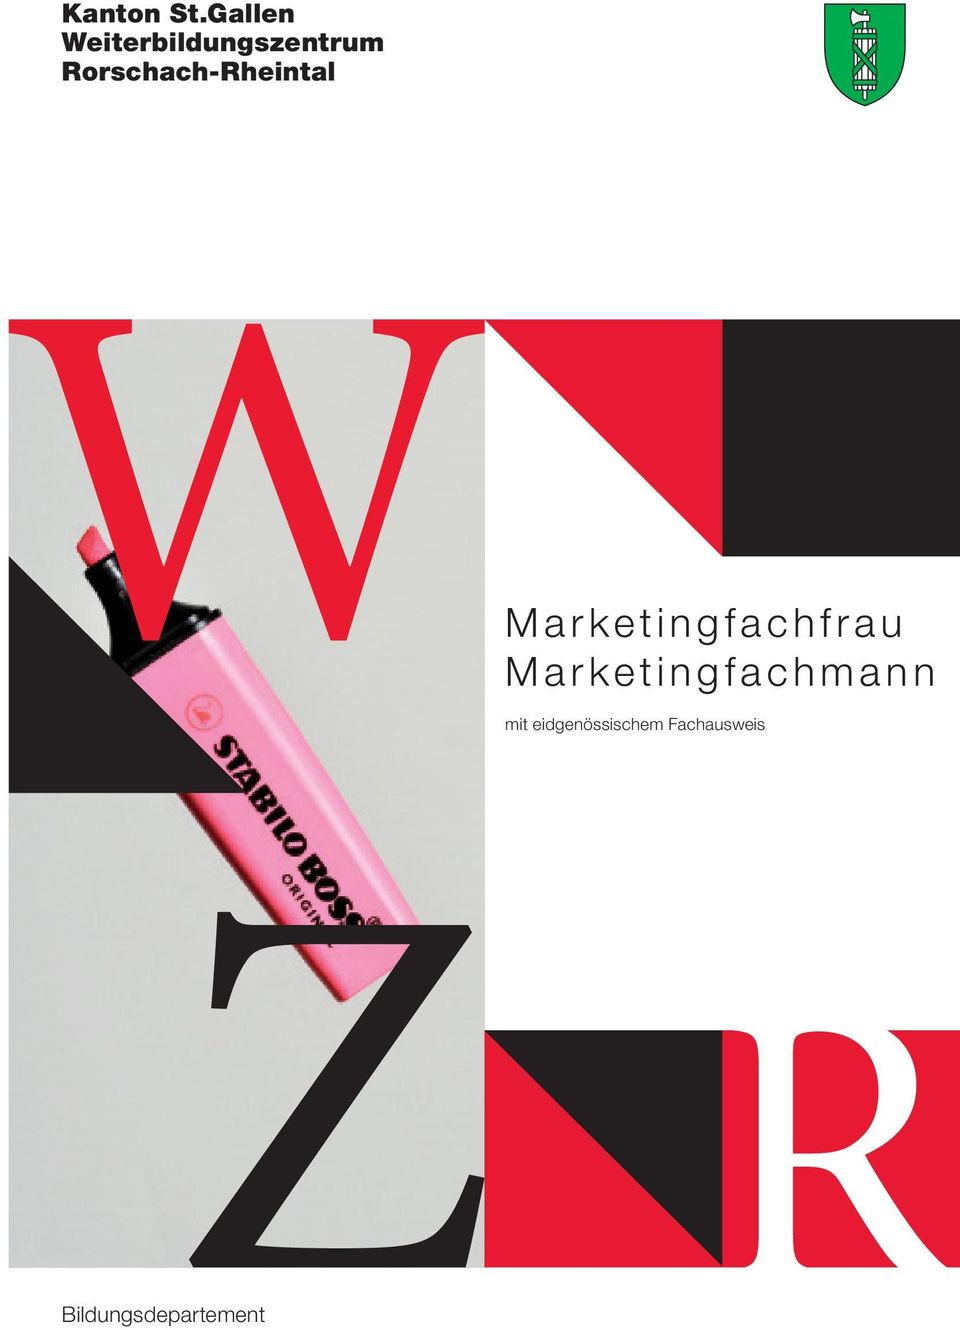 Rorschach-Rheintal Marketingfachfrau